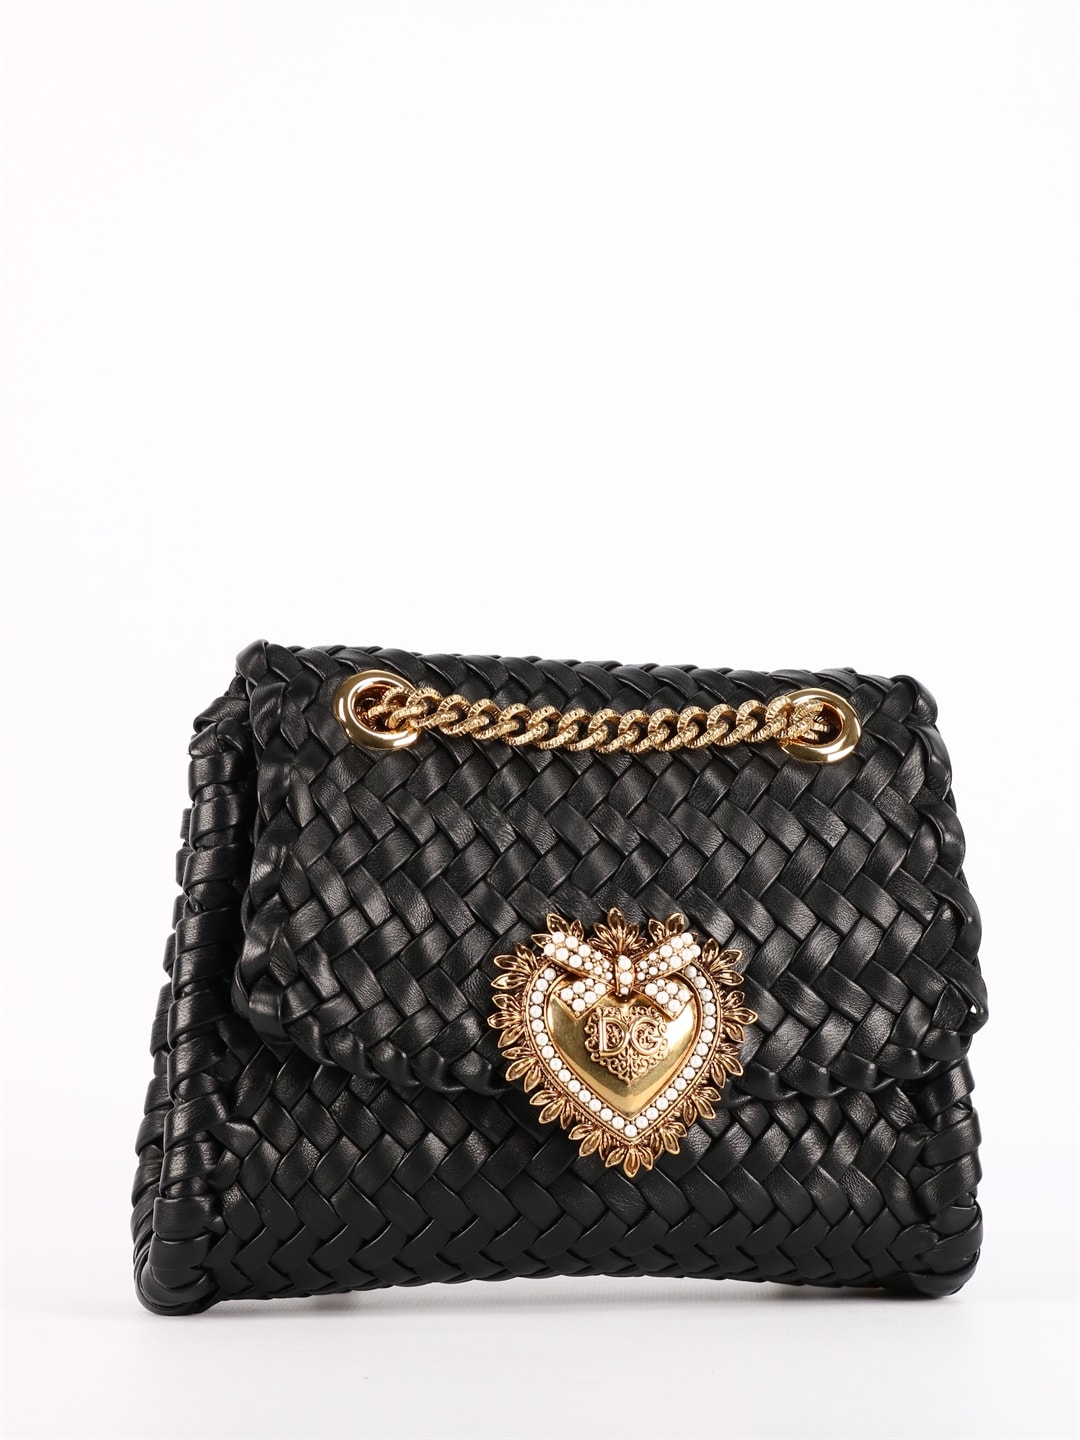 Dolce & Gabbana DEVOTION BAG